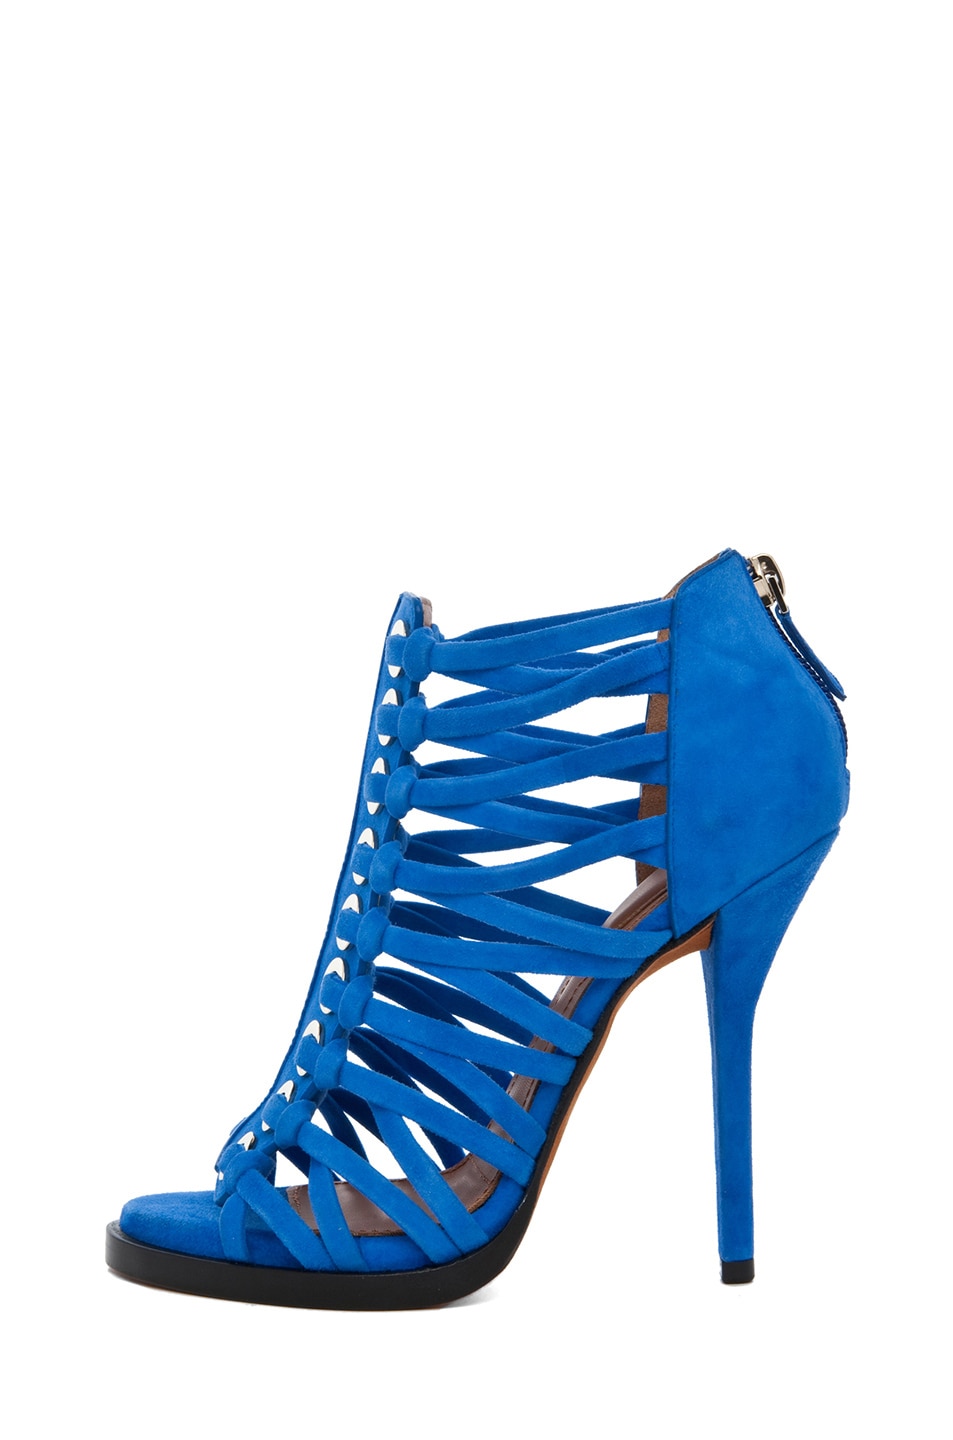 Givenchy Zenaide Suede Nautical Eyelet Heel in Blue | FWRD